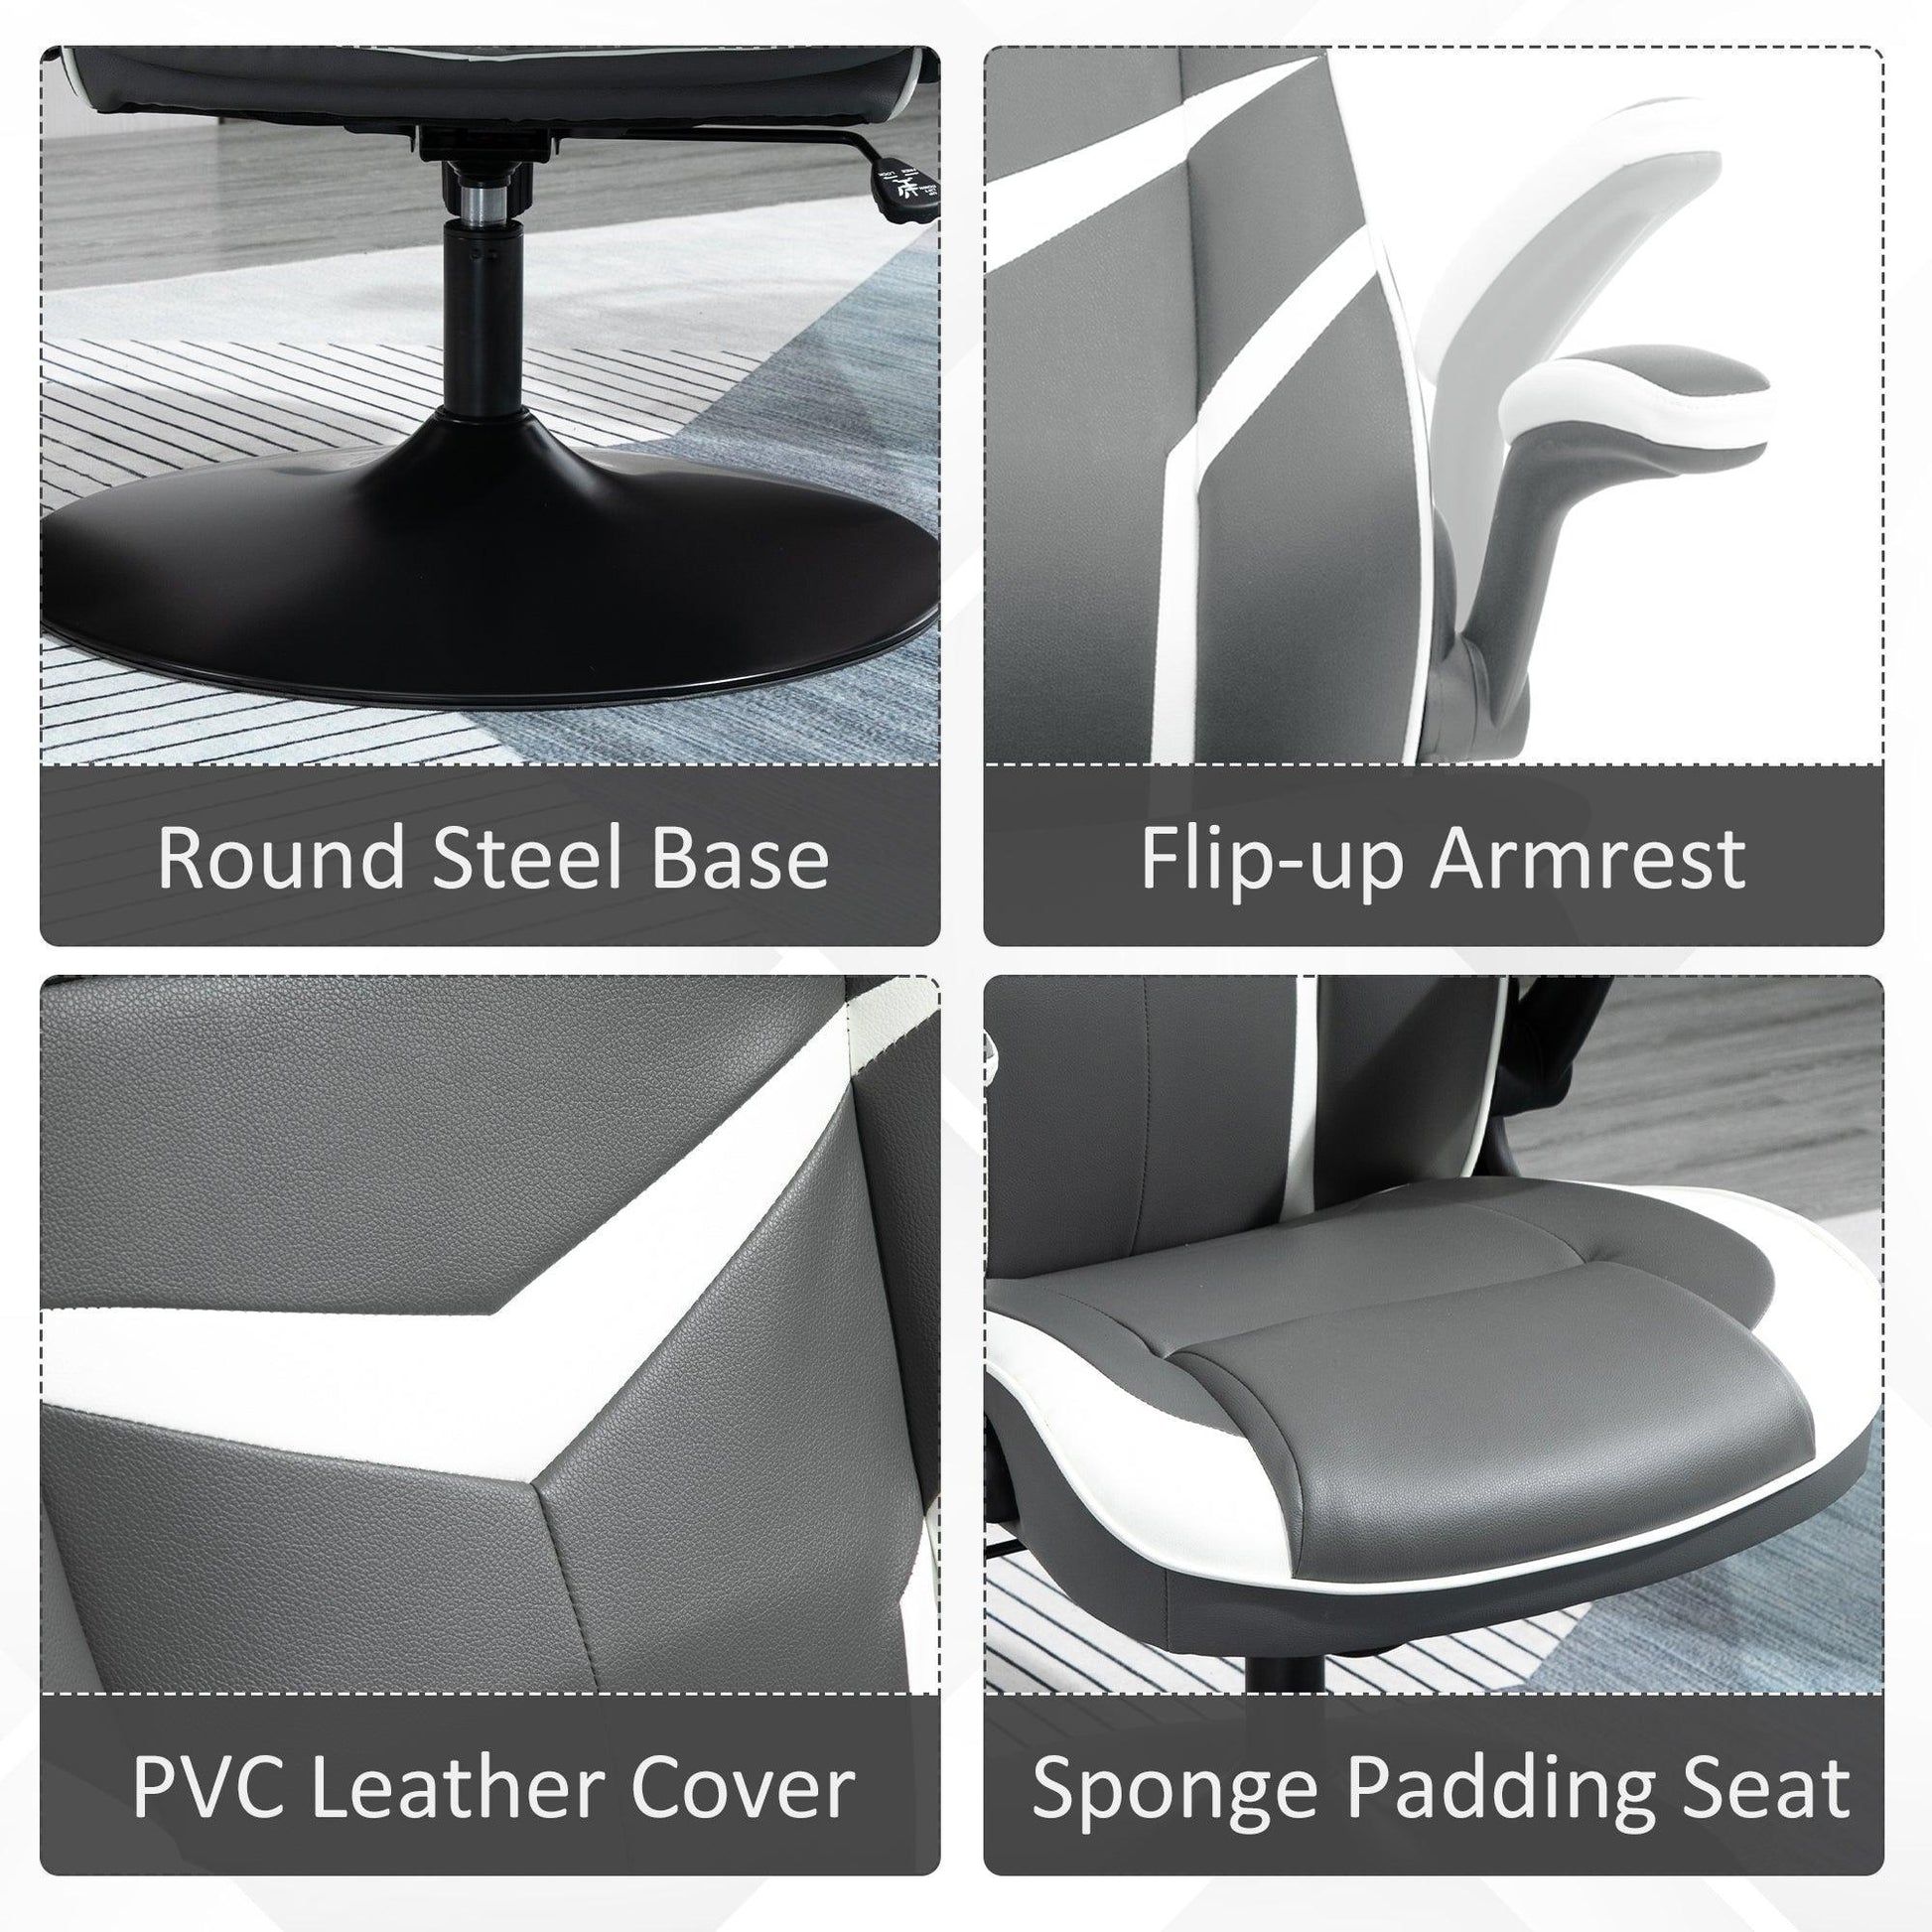 Vinsetto Gaming Chair: Adjustable Height, Swivel Base (Grey) - ALL4U RETAILER LTD